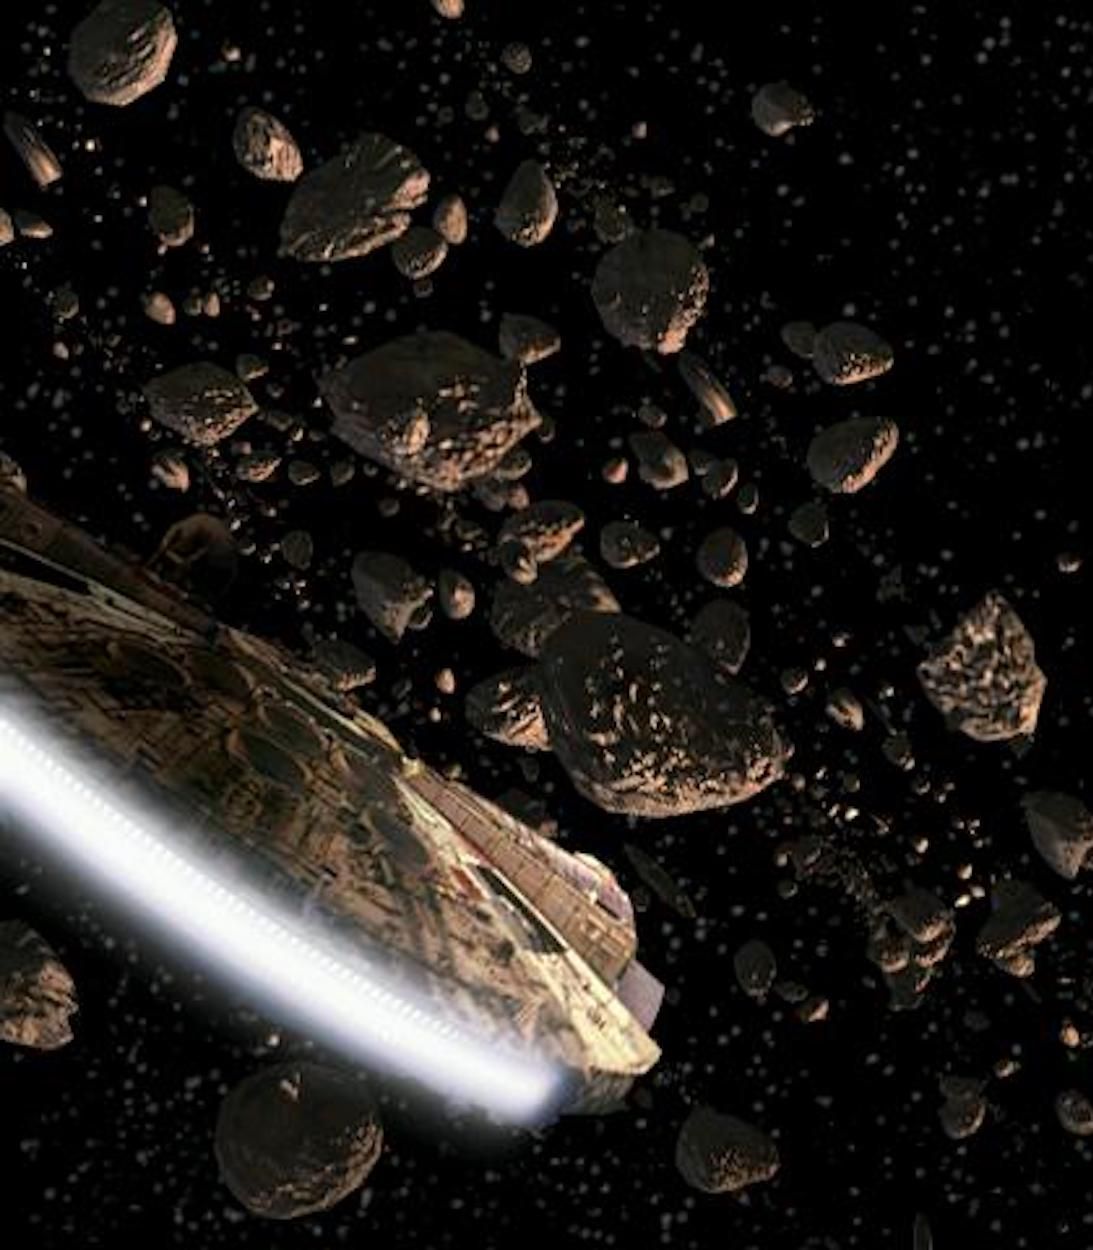 Empire asteroid field